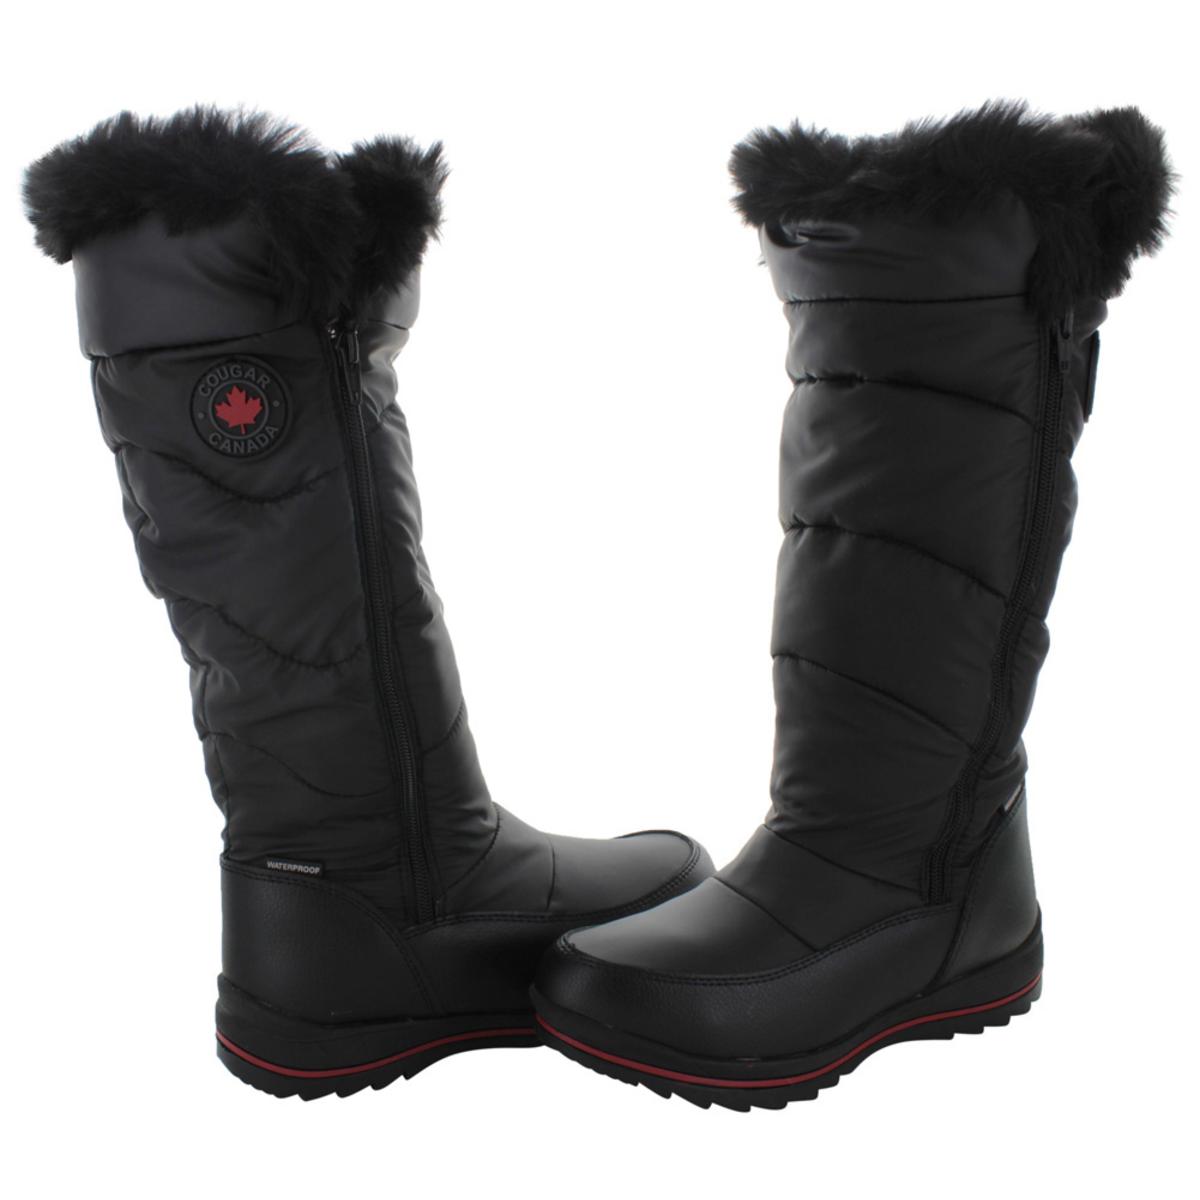 Cougar Bistro Women's Tall Waterproof Nylon Winter Snow Boots | eBay